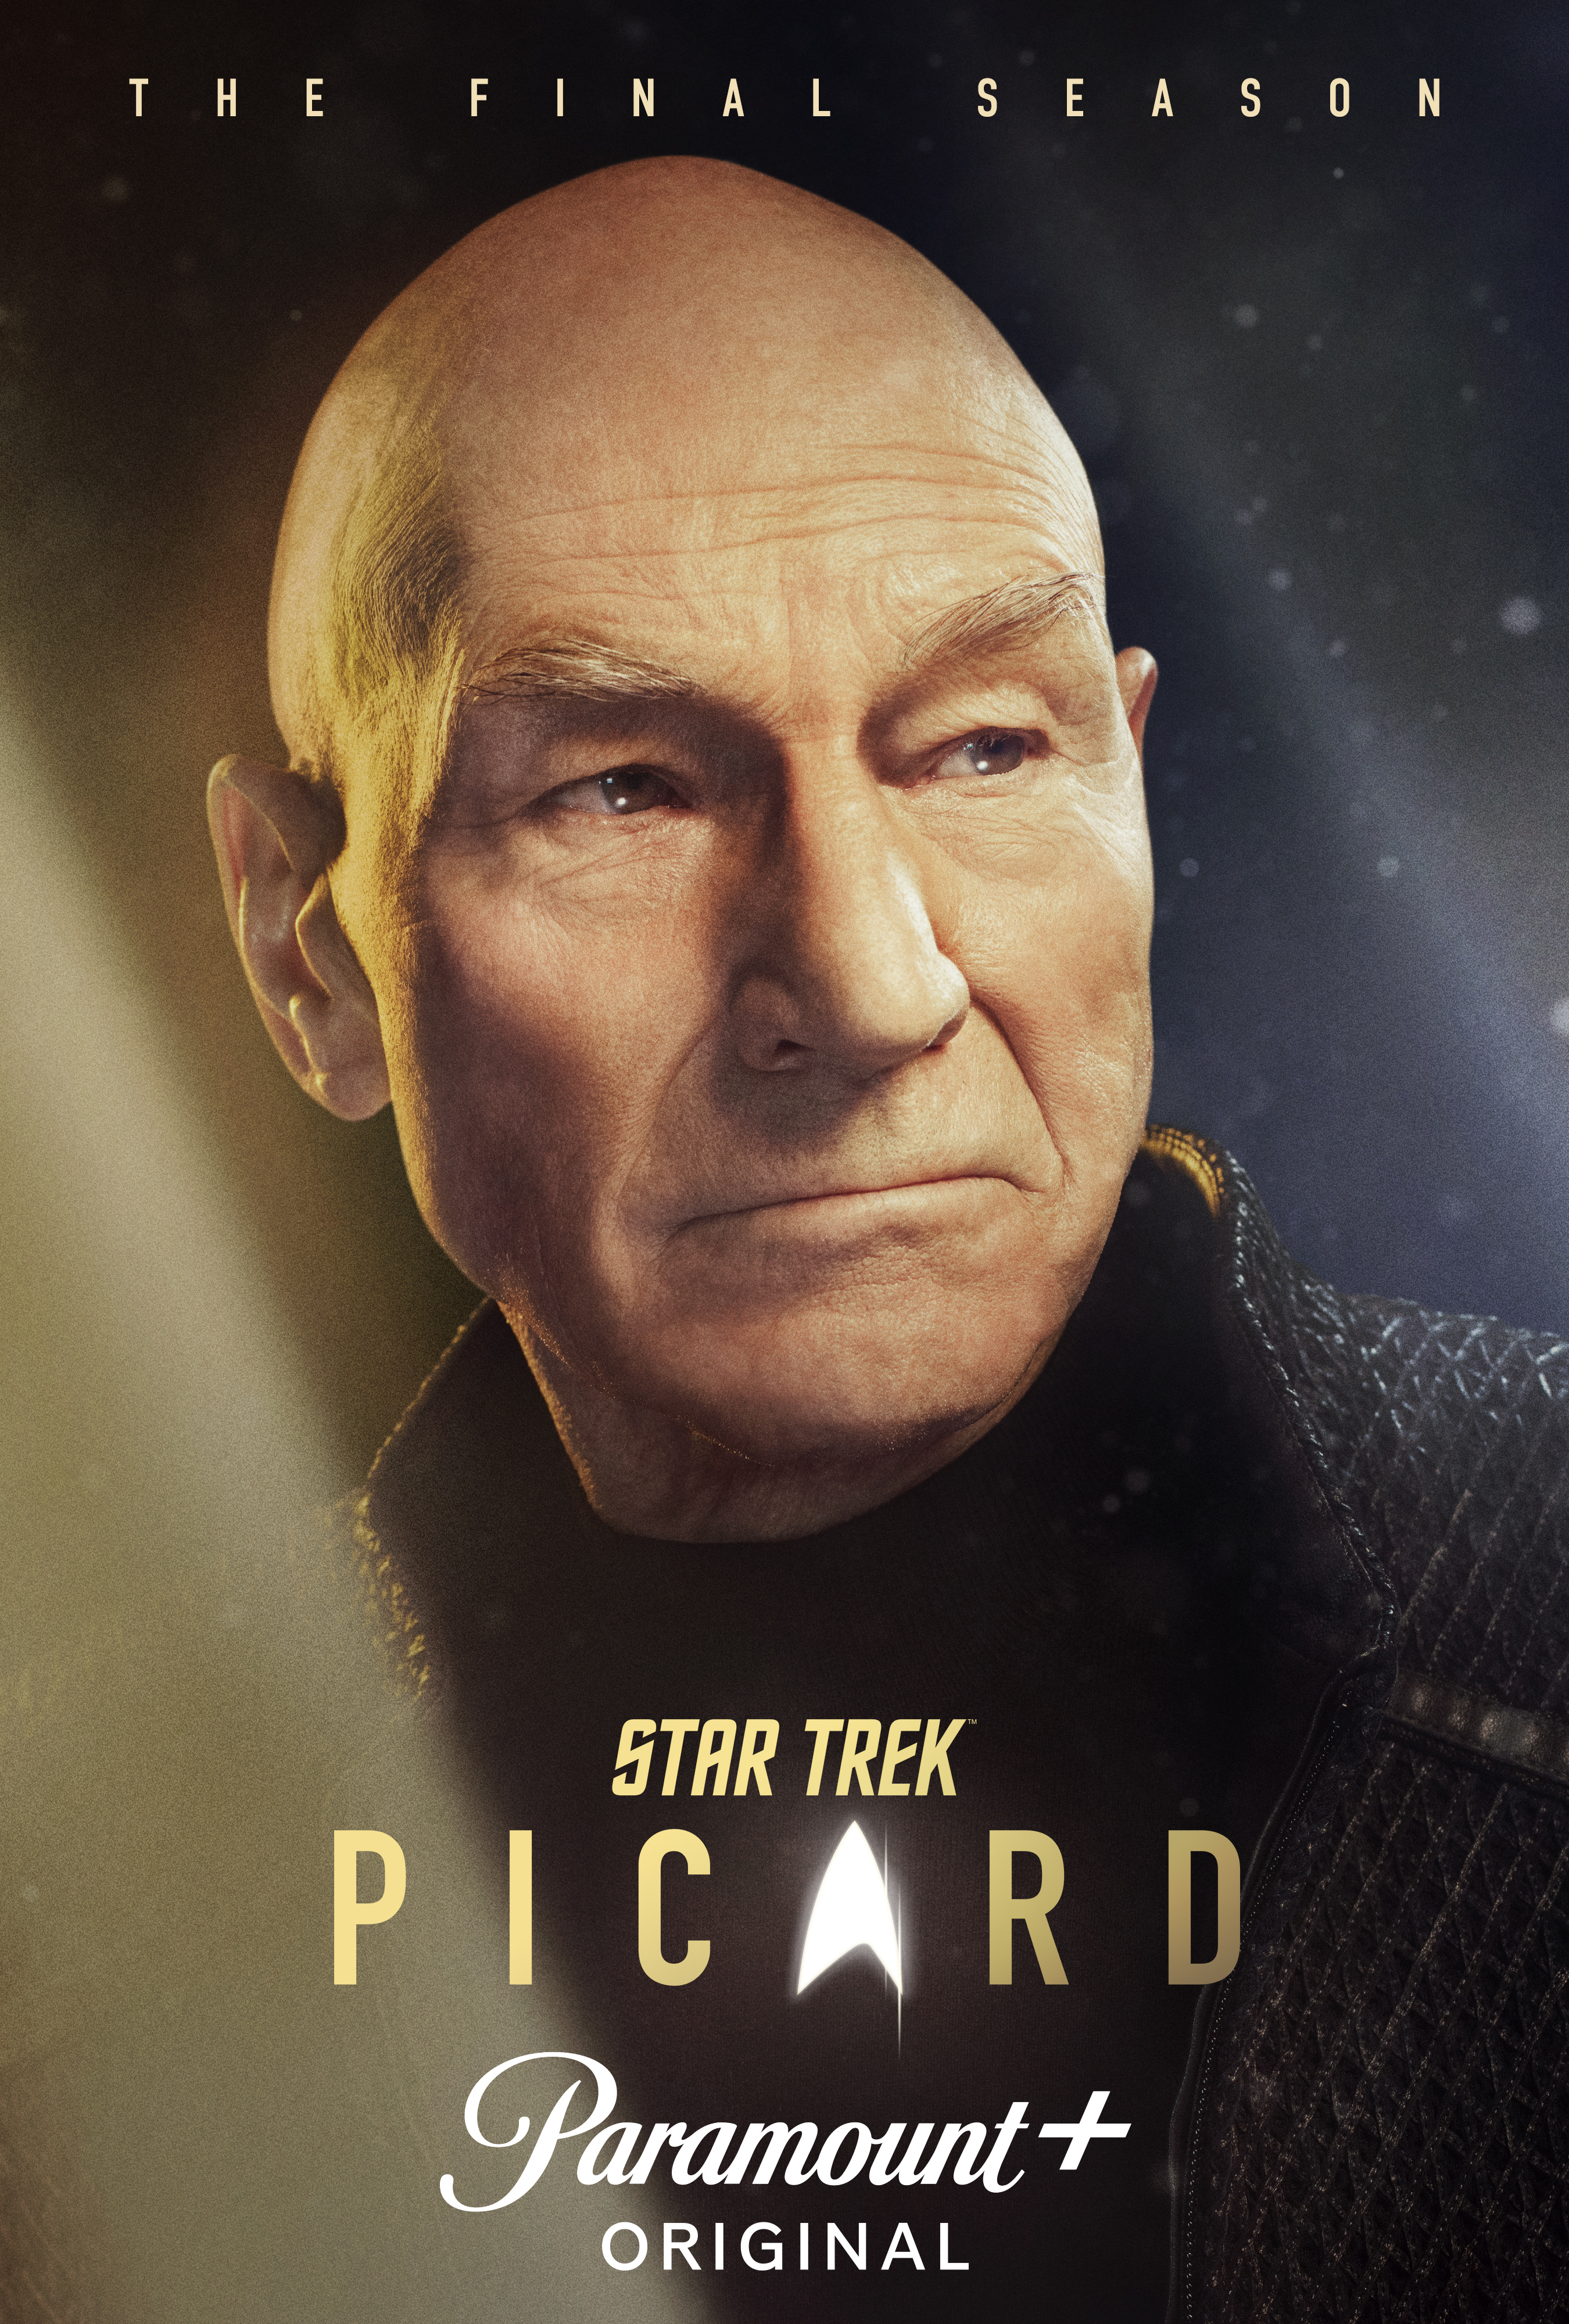 Star Trek: Picard on Paramount+